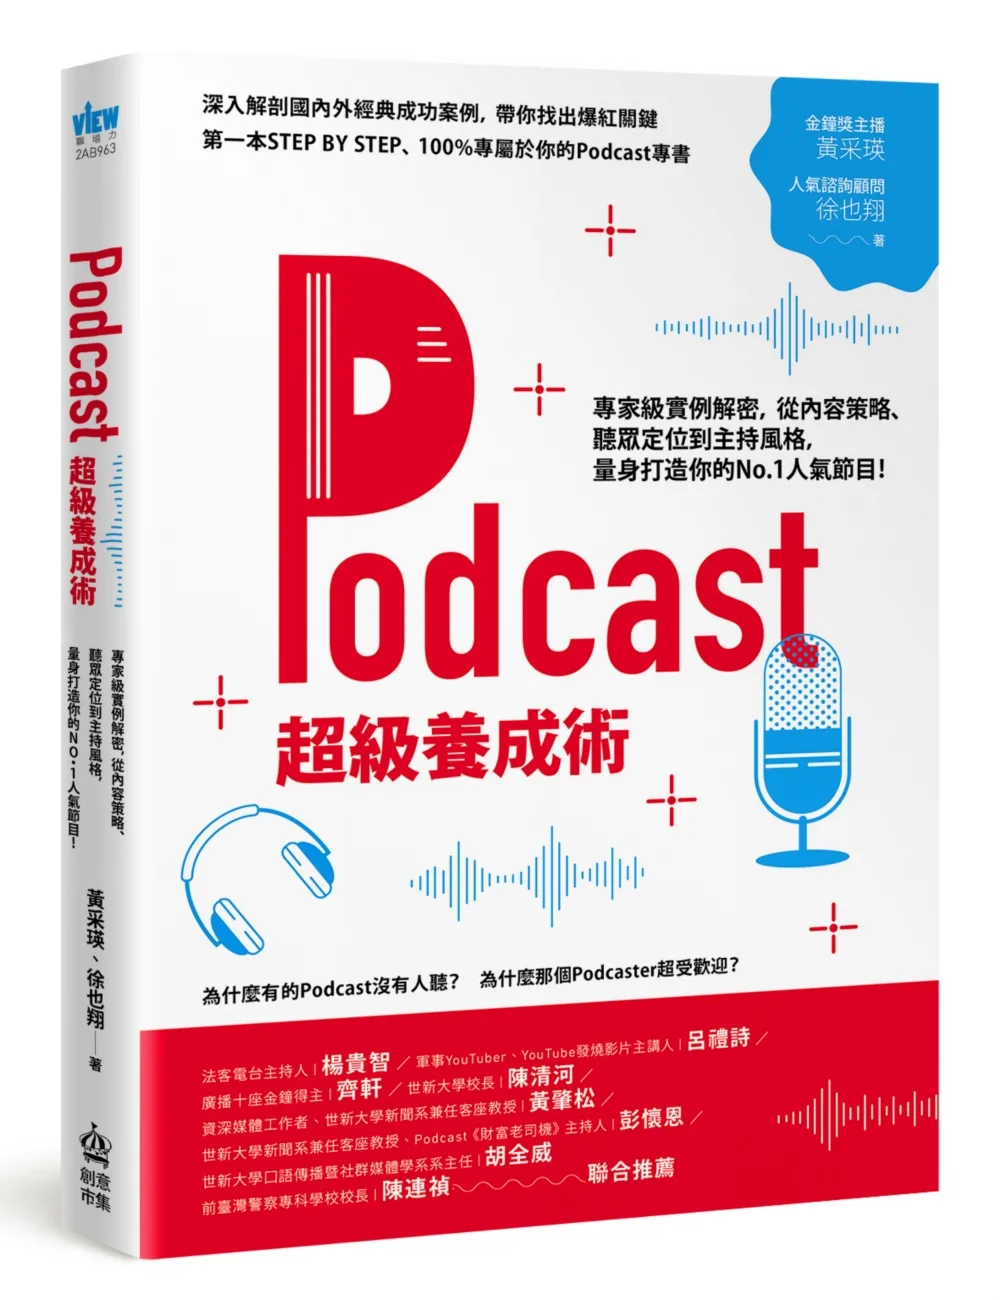 podcaster的成功手冊──輕鬆簡單製作屬於自己的PODCAST